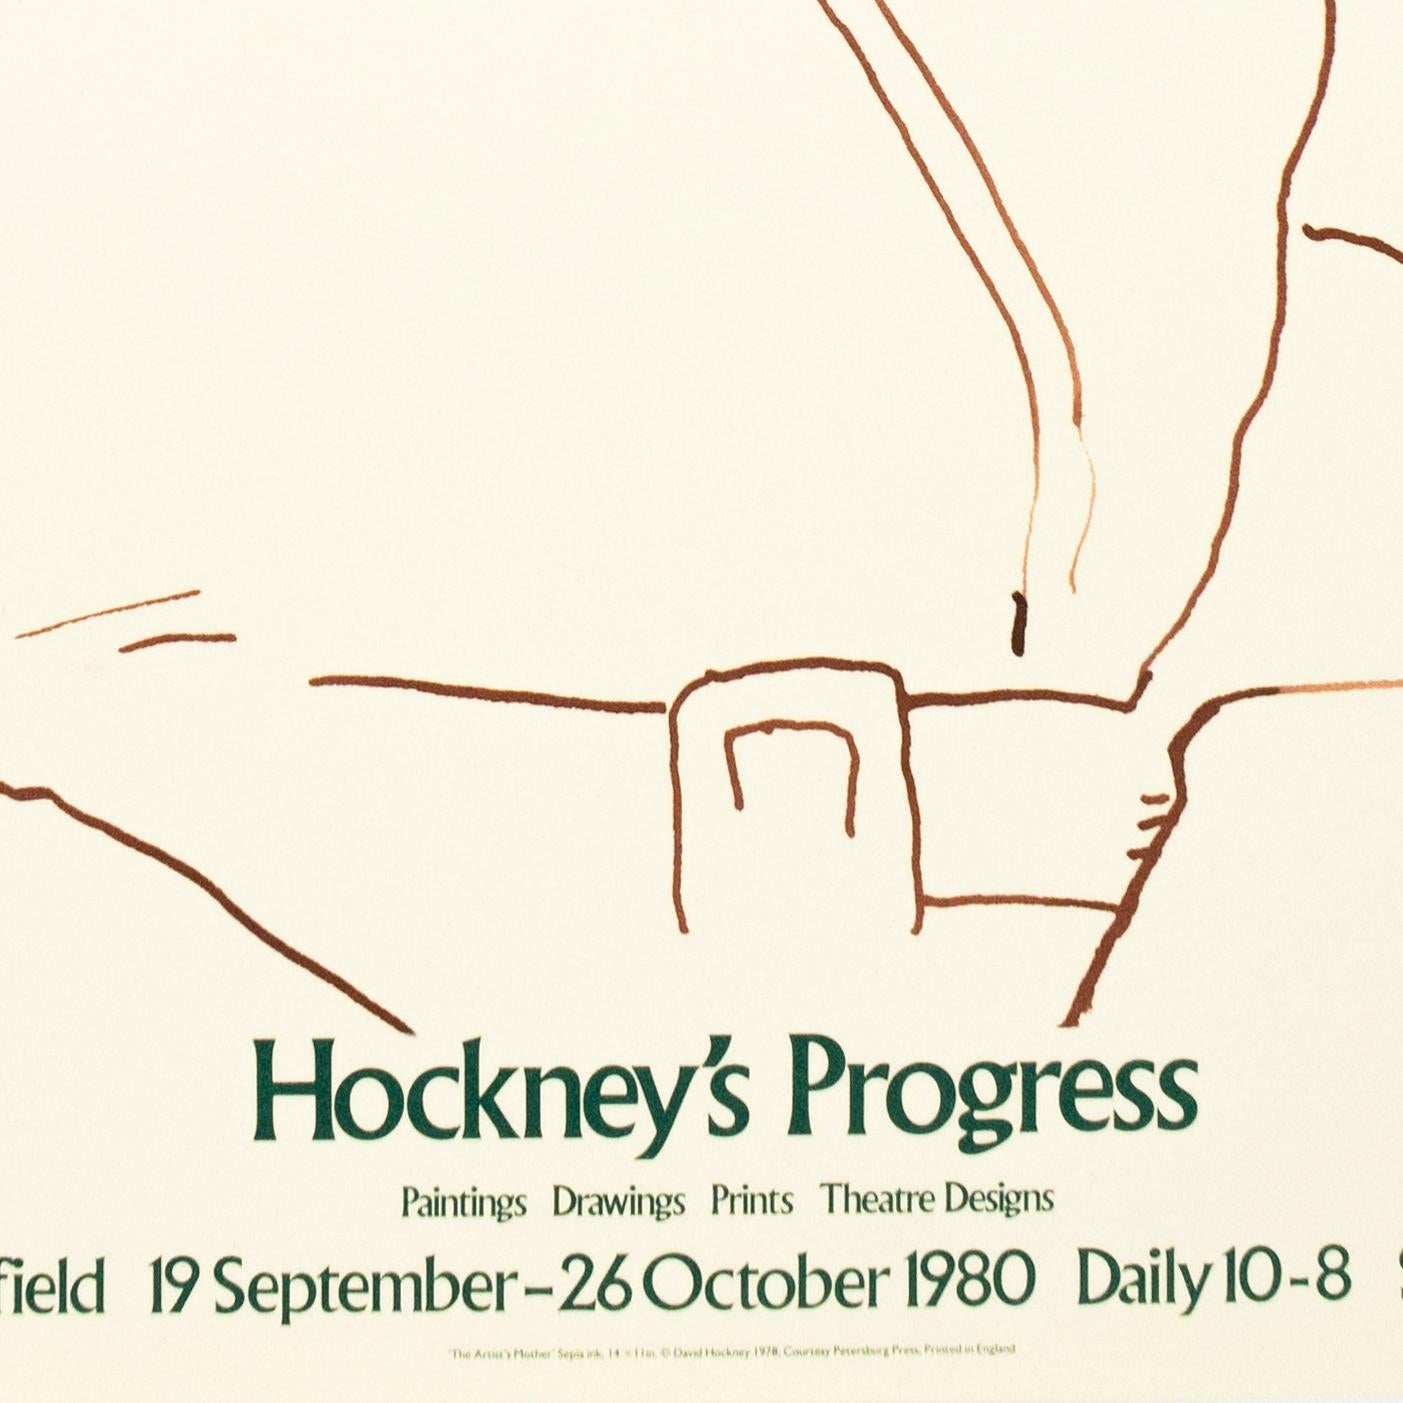 David Hockney portrait drawing vintage Exhibition poster Graves Art Gallery '80  - Print by (after) David Hockney